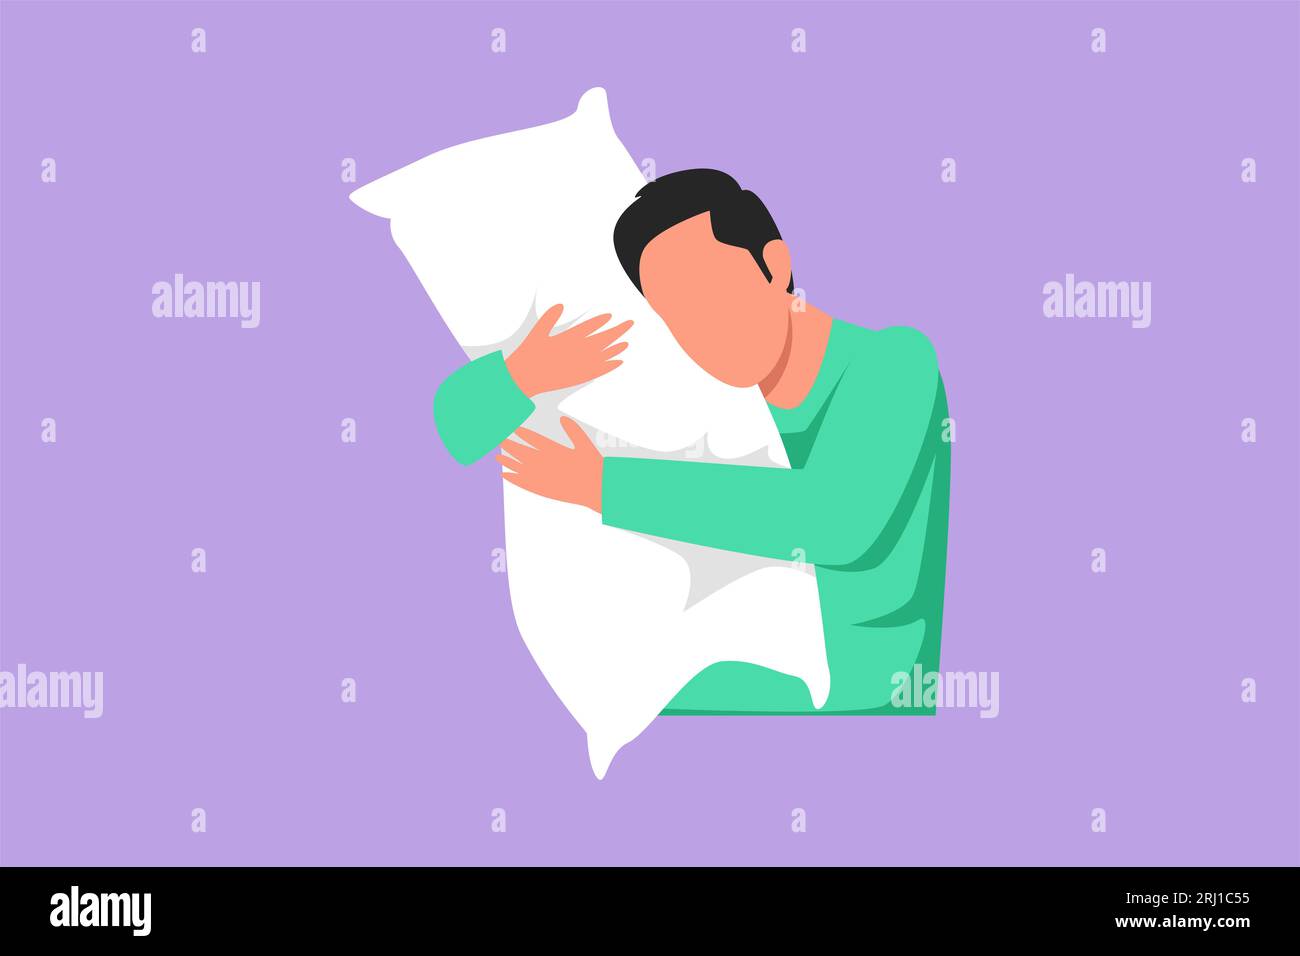 Cartoon flat style drawing male sleeping while hugging huge pillow. Activities of sleepy people. Sweet dream or sleep concept. Man took sleeping pill Stock Photo